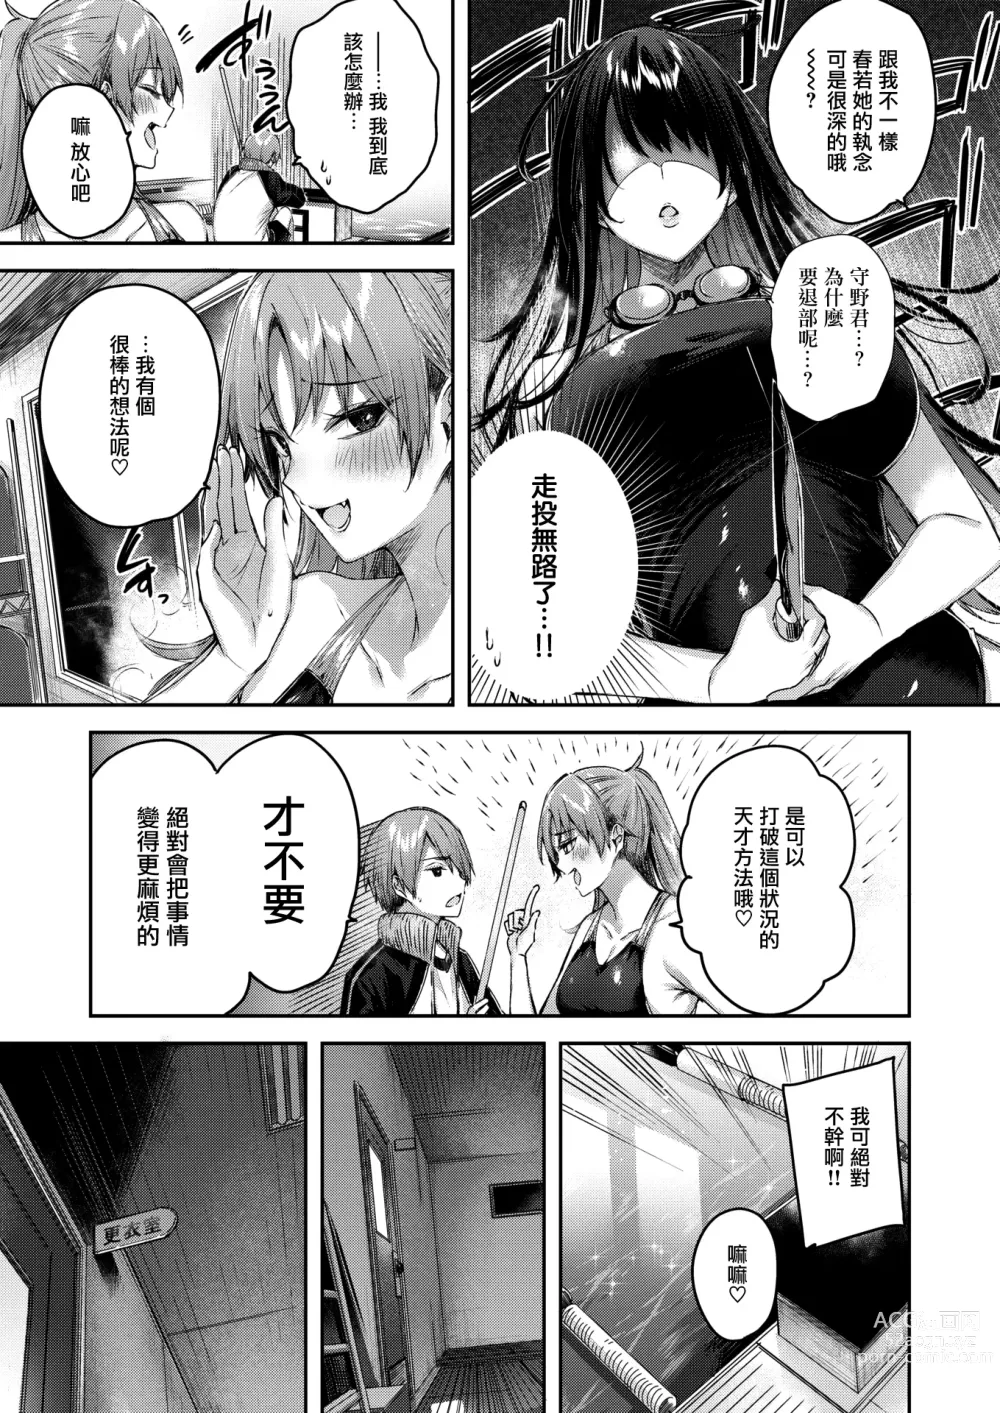 Page 7 of manga Cold Fish